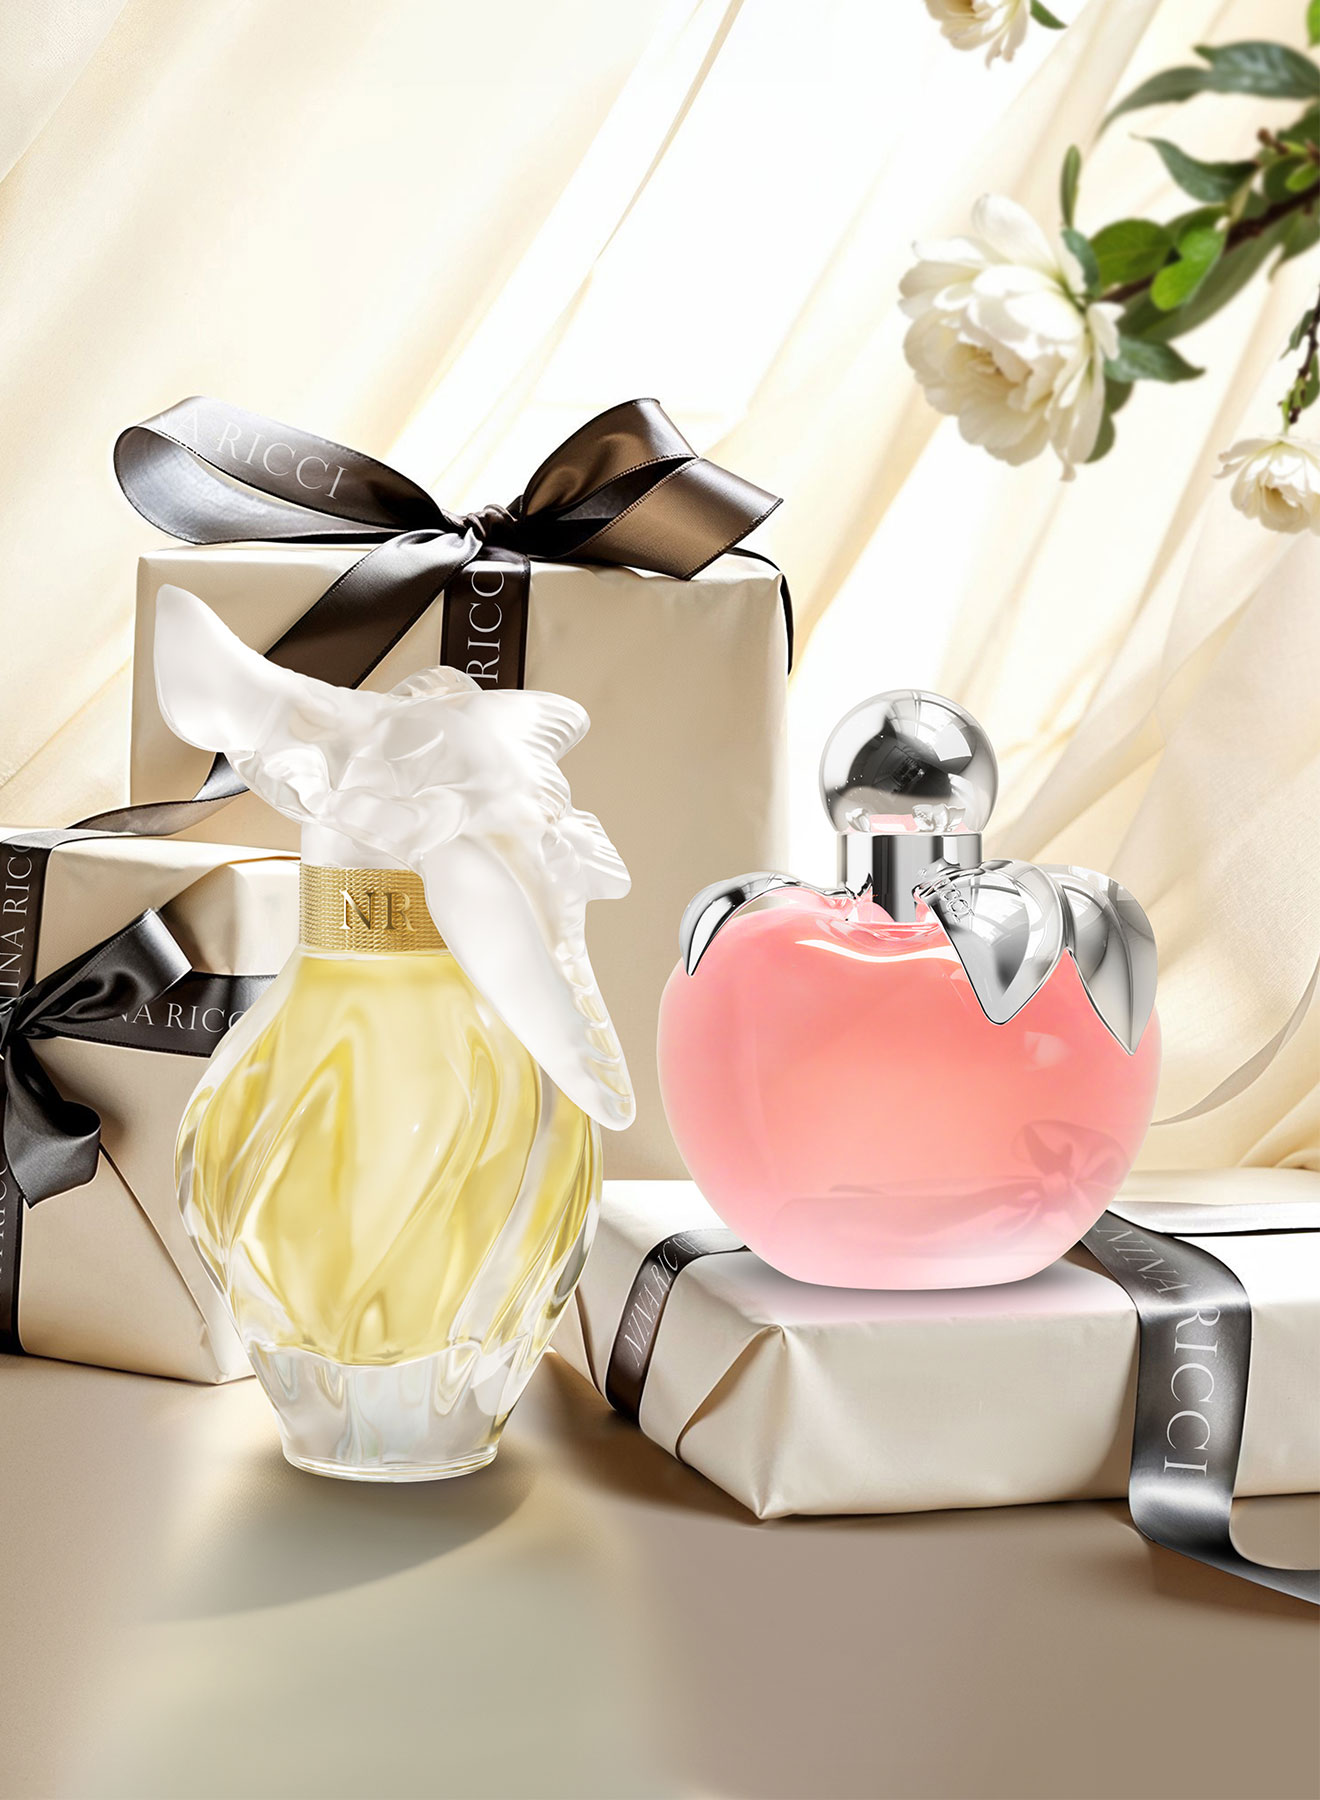 Nina Ricci Fashion and Fragrances - Official website